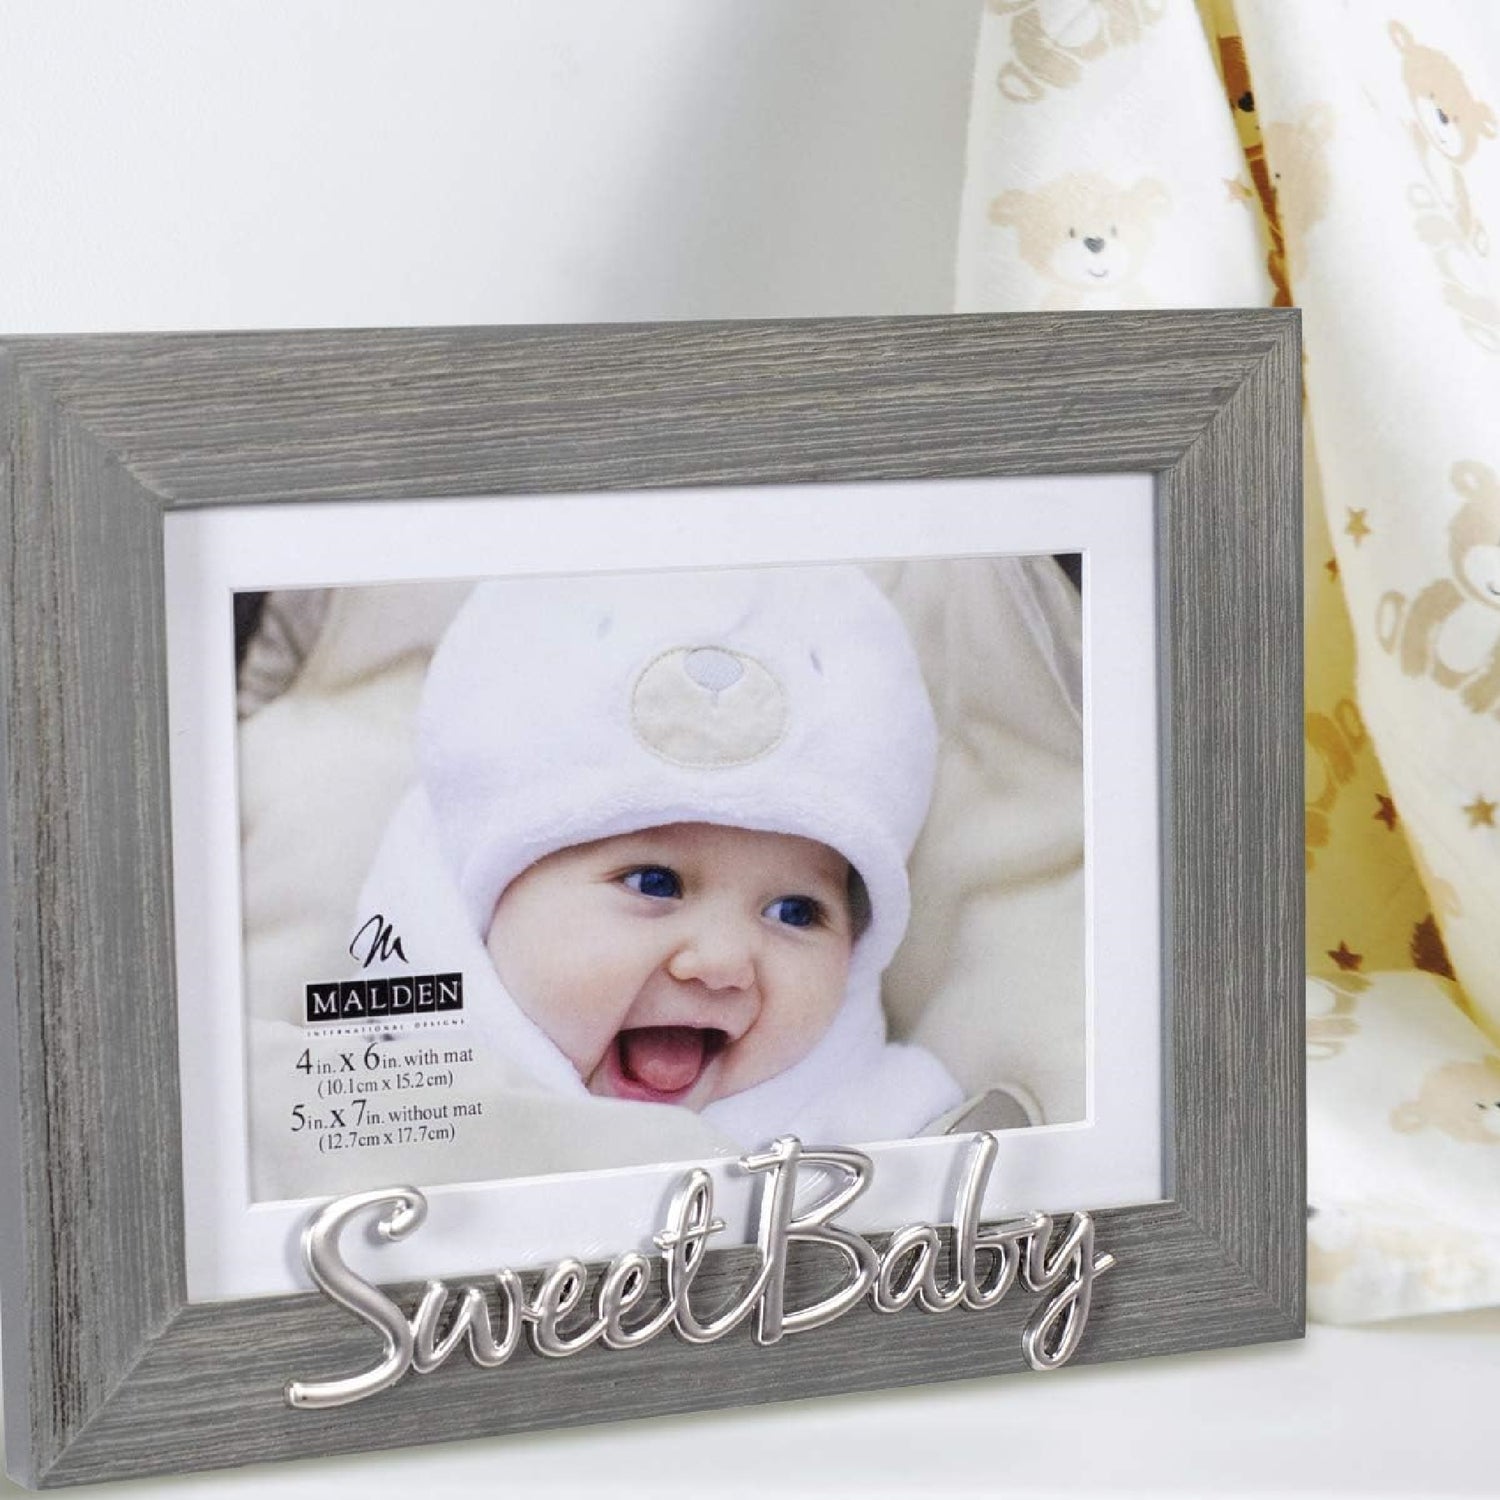 Malden "Sweet Baby" Photo Frame